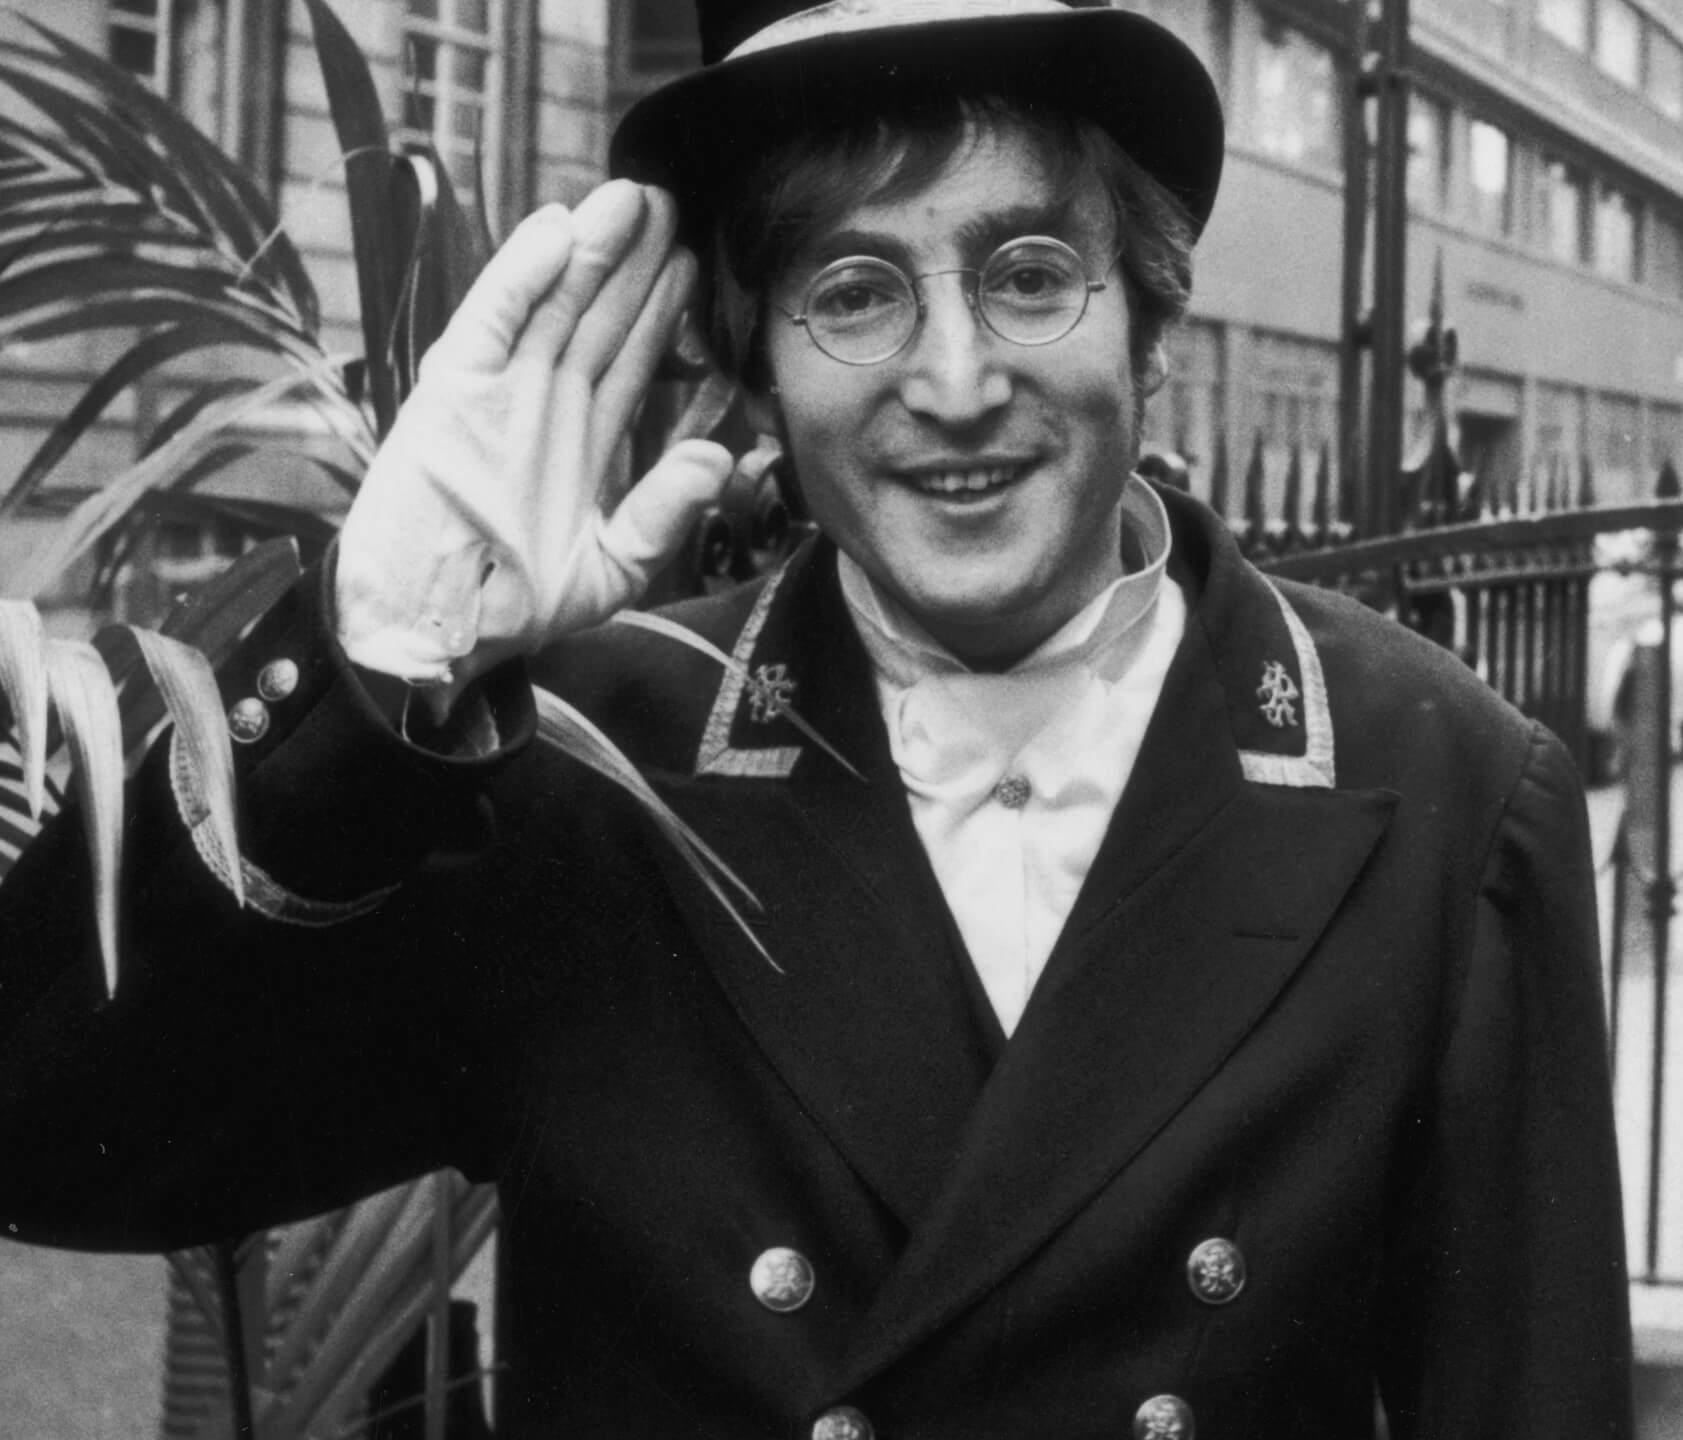 John Lennon saluting the viewer